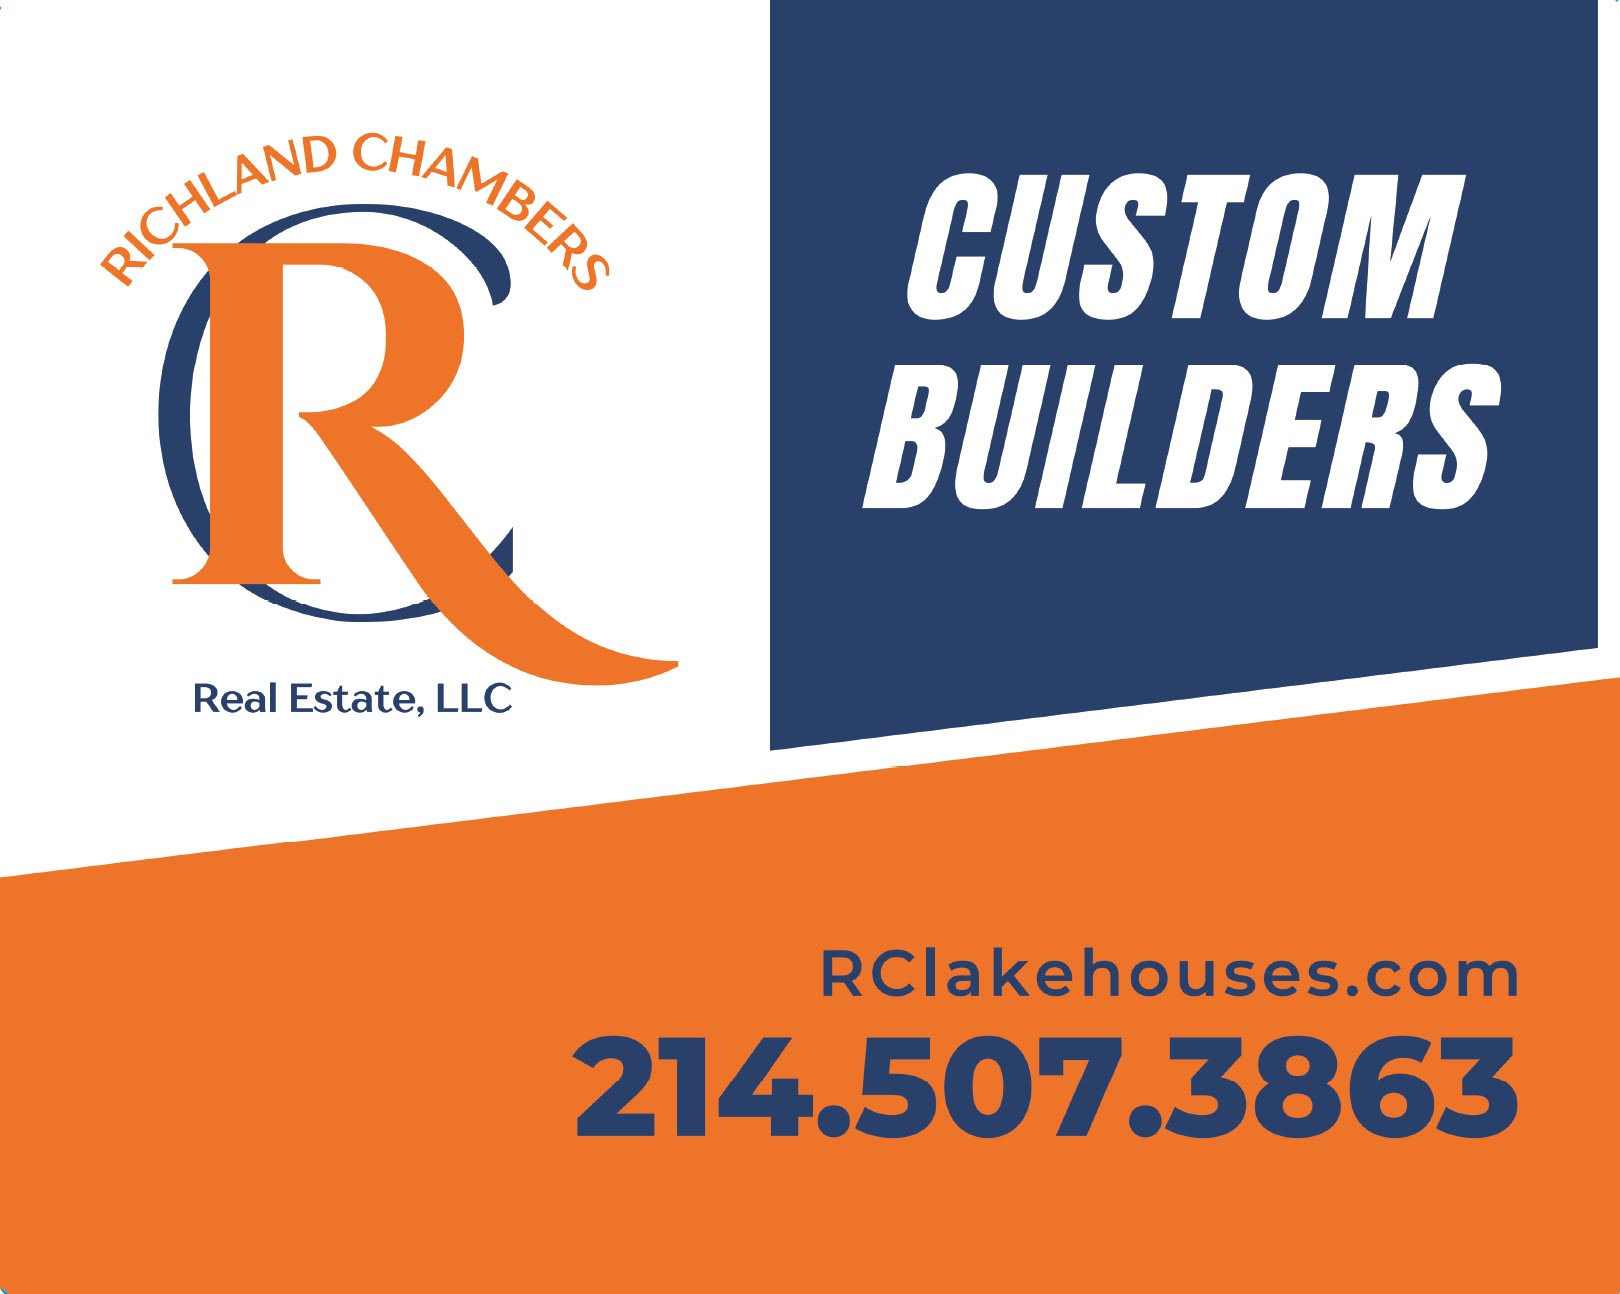 Richland Chambers Real Estate, LLC